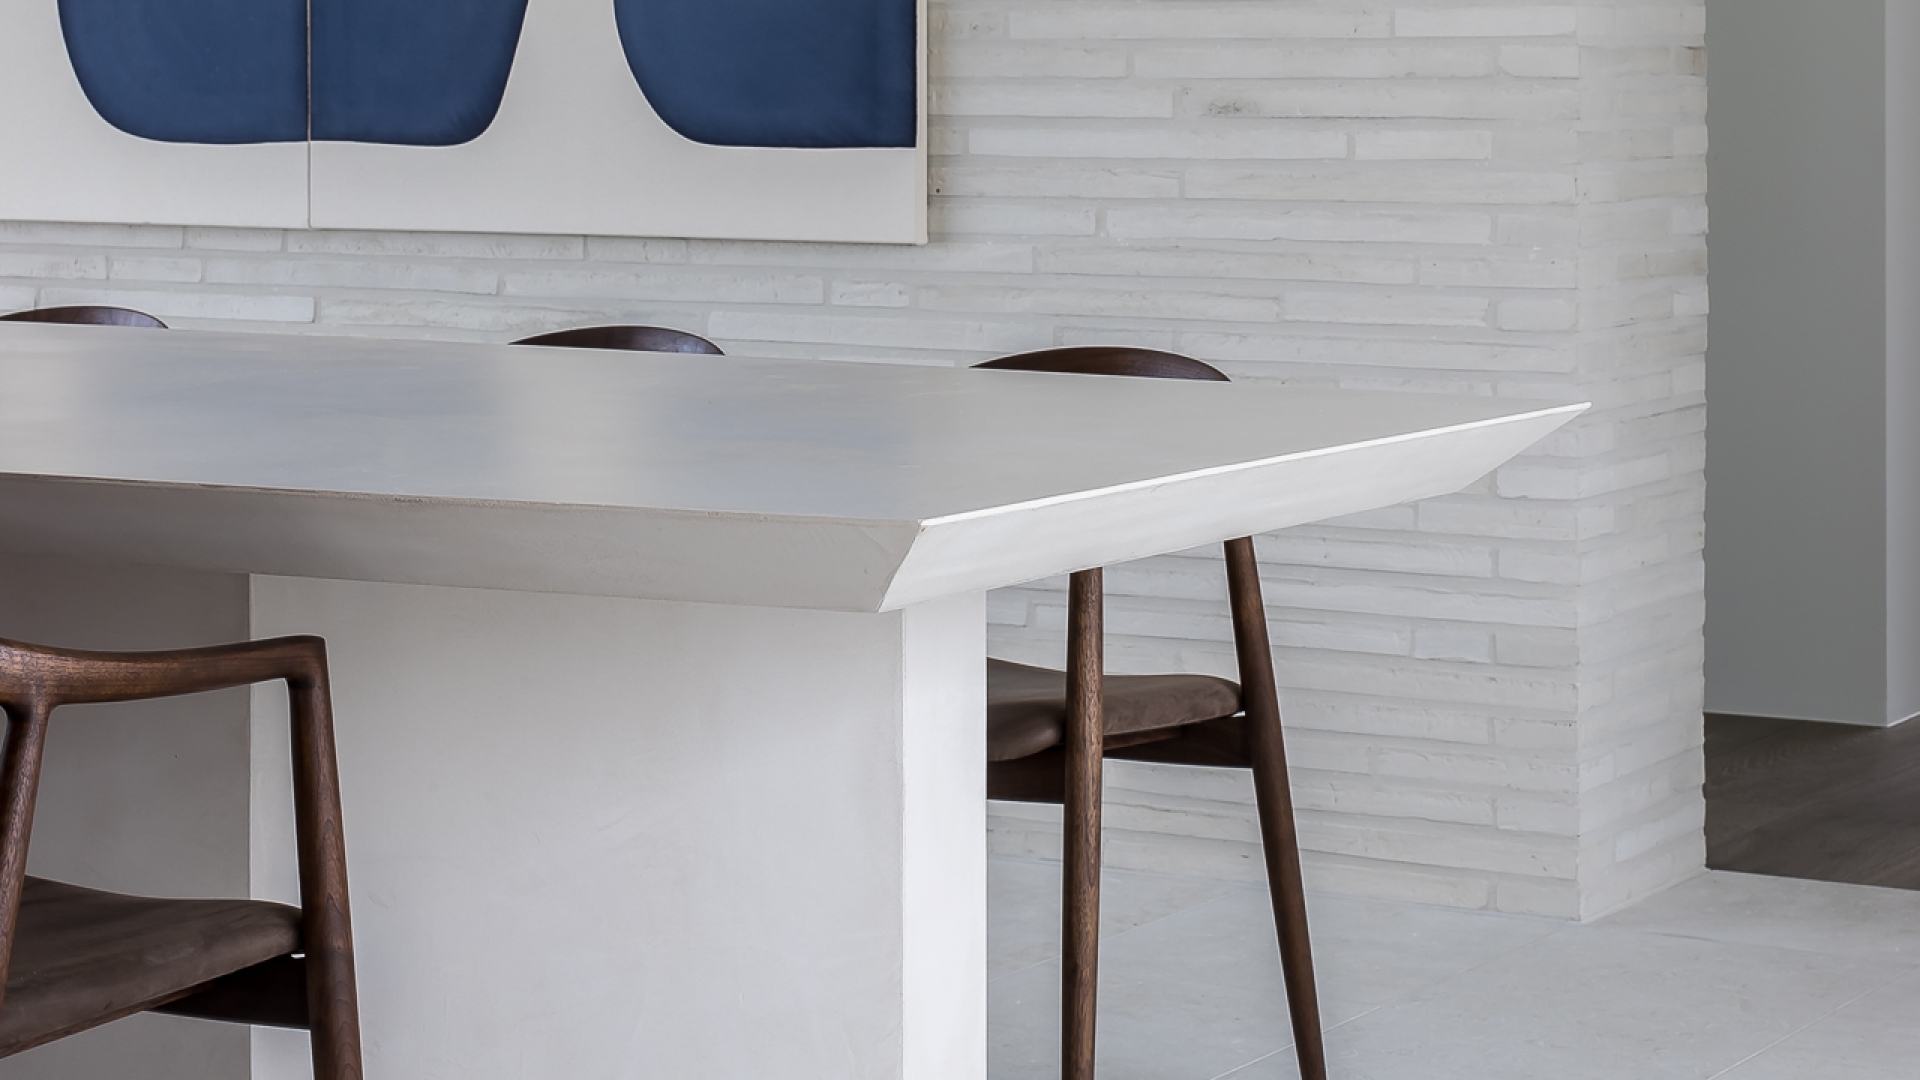 Villa HB interior architecture by Eline Ostyn custom table